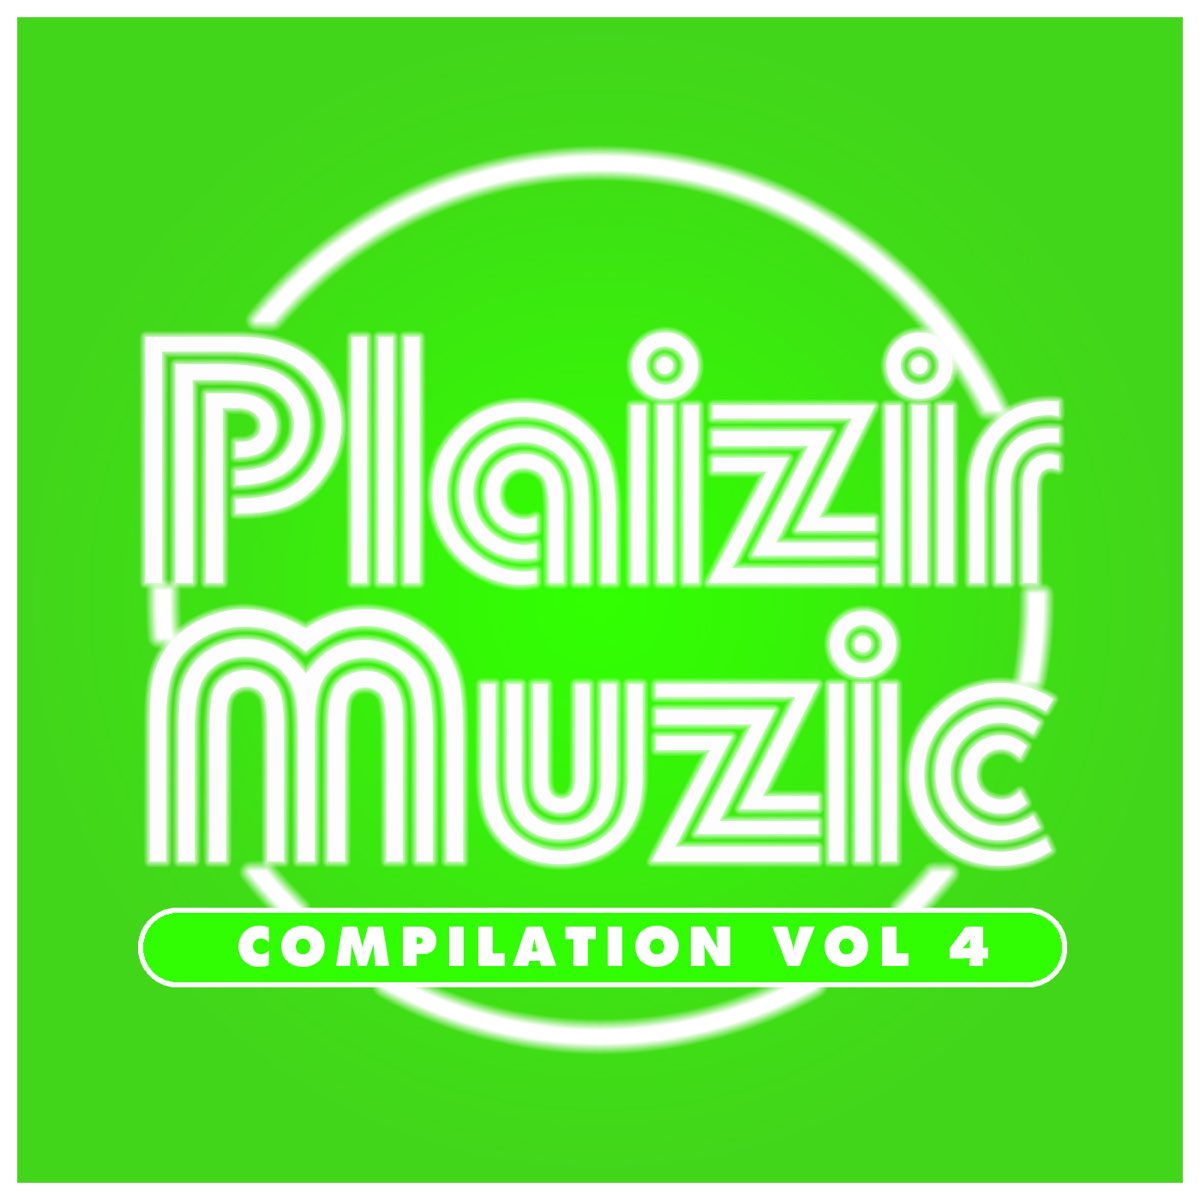 Compilation Plaizir Muzic, Vol. 4 - Album by Various Artists - Apple Music